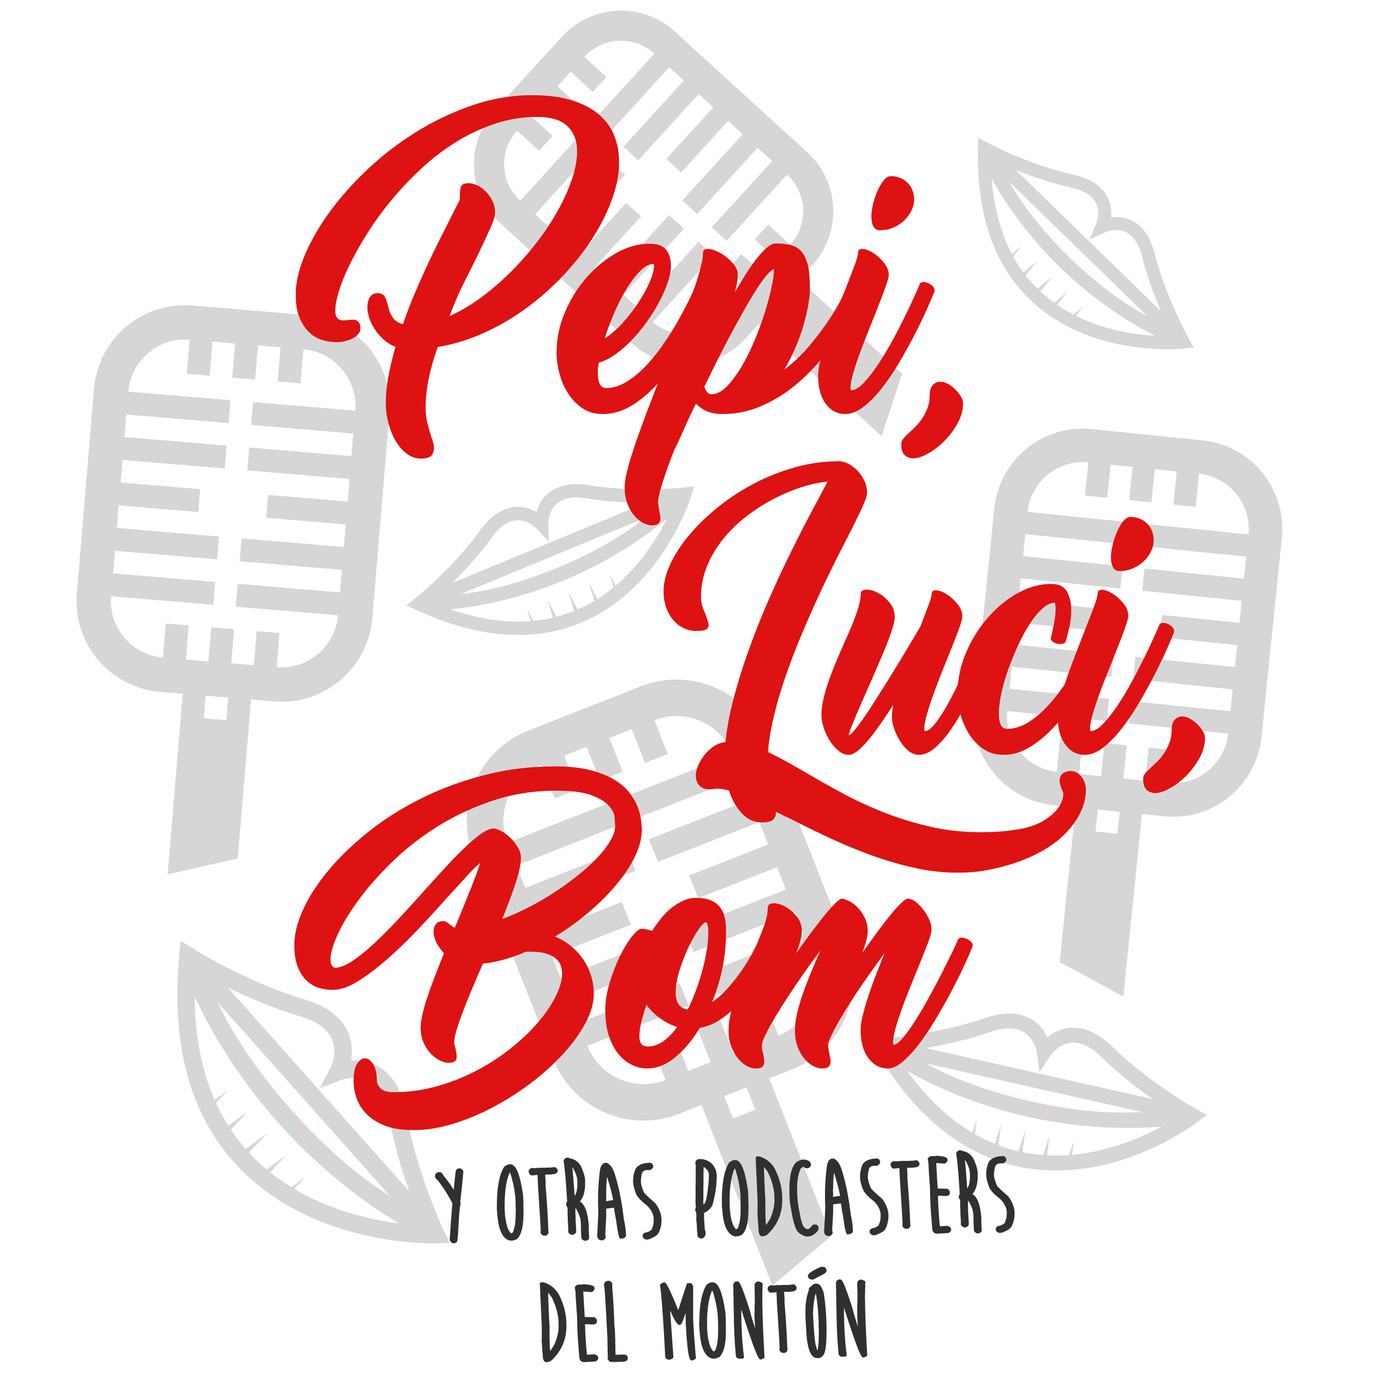 Pepi, Luci, Bom y otras podcasters del montón